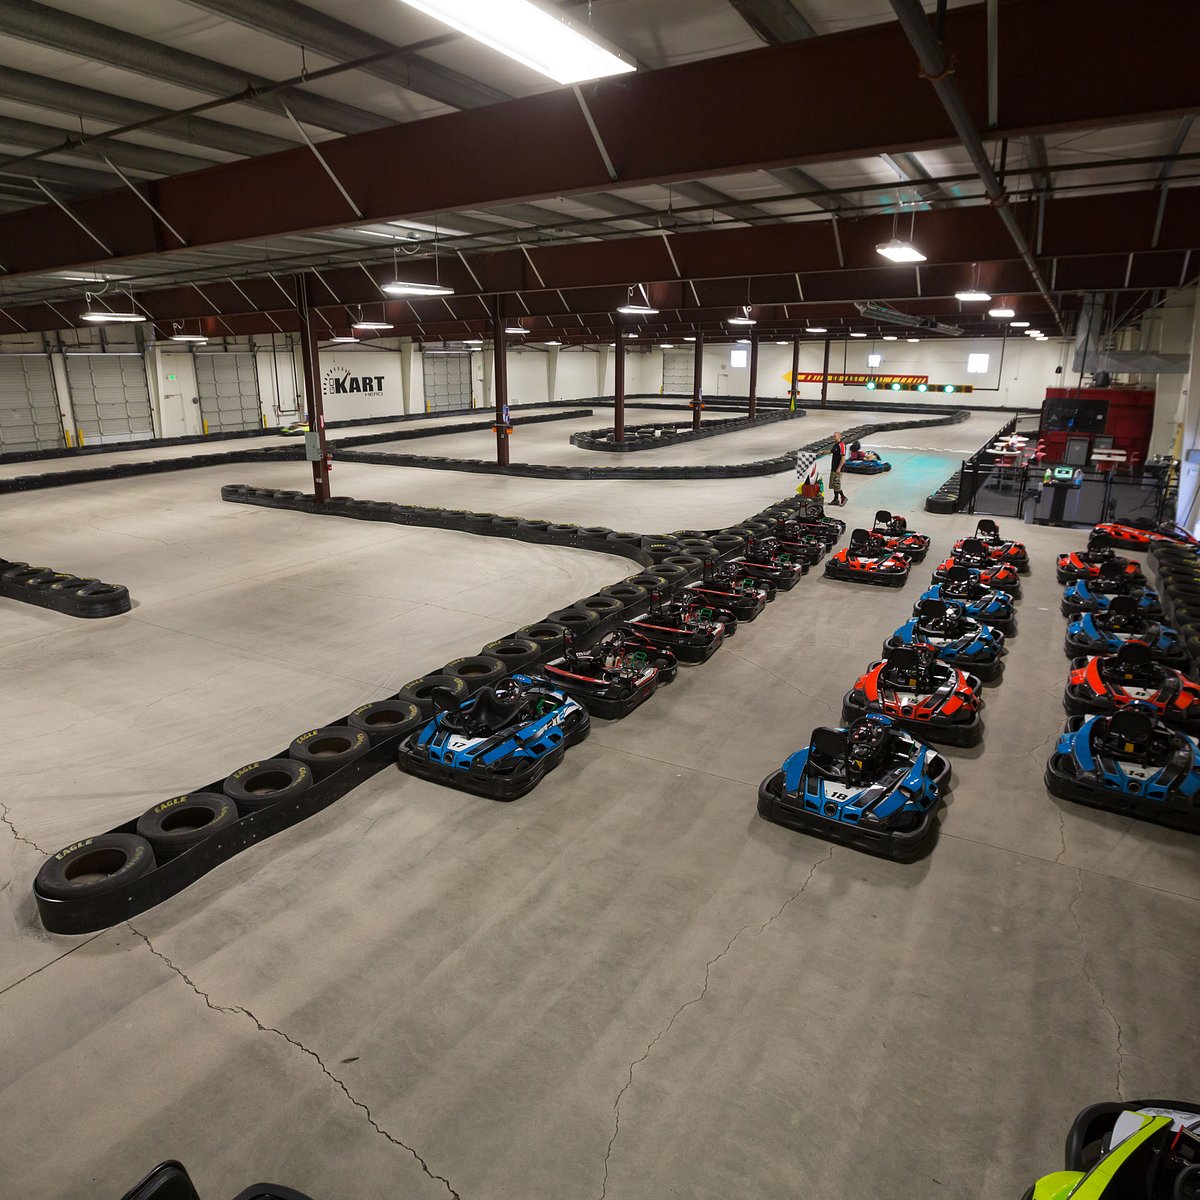 Go-kart track opens in Farmington Valley